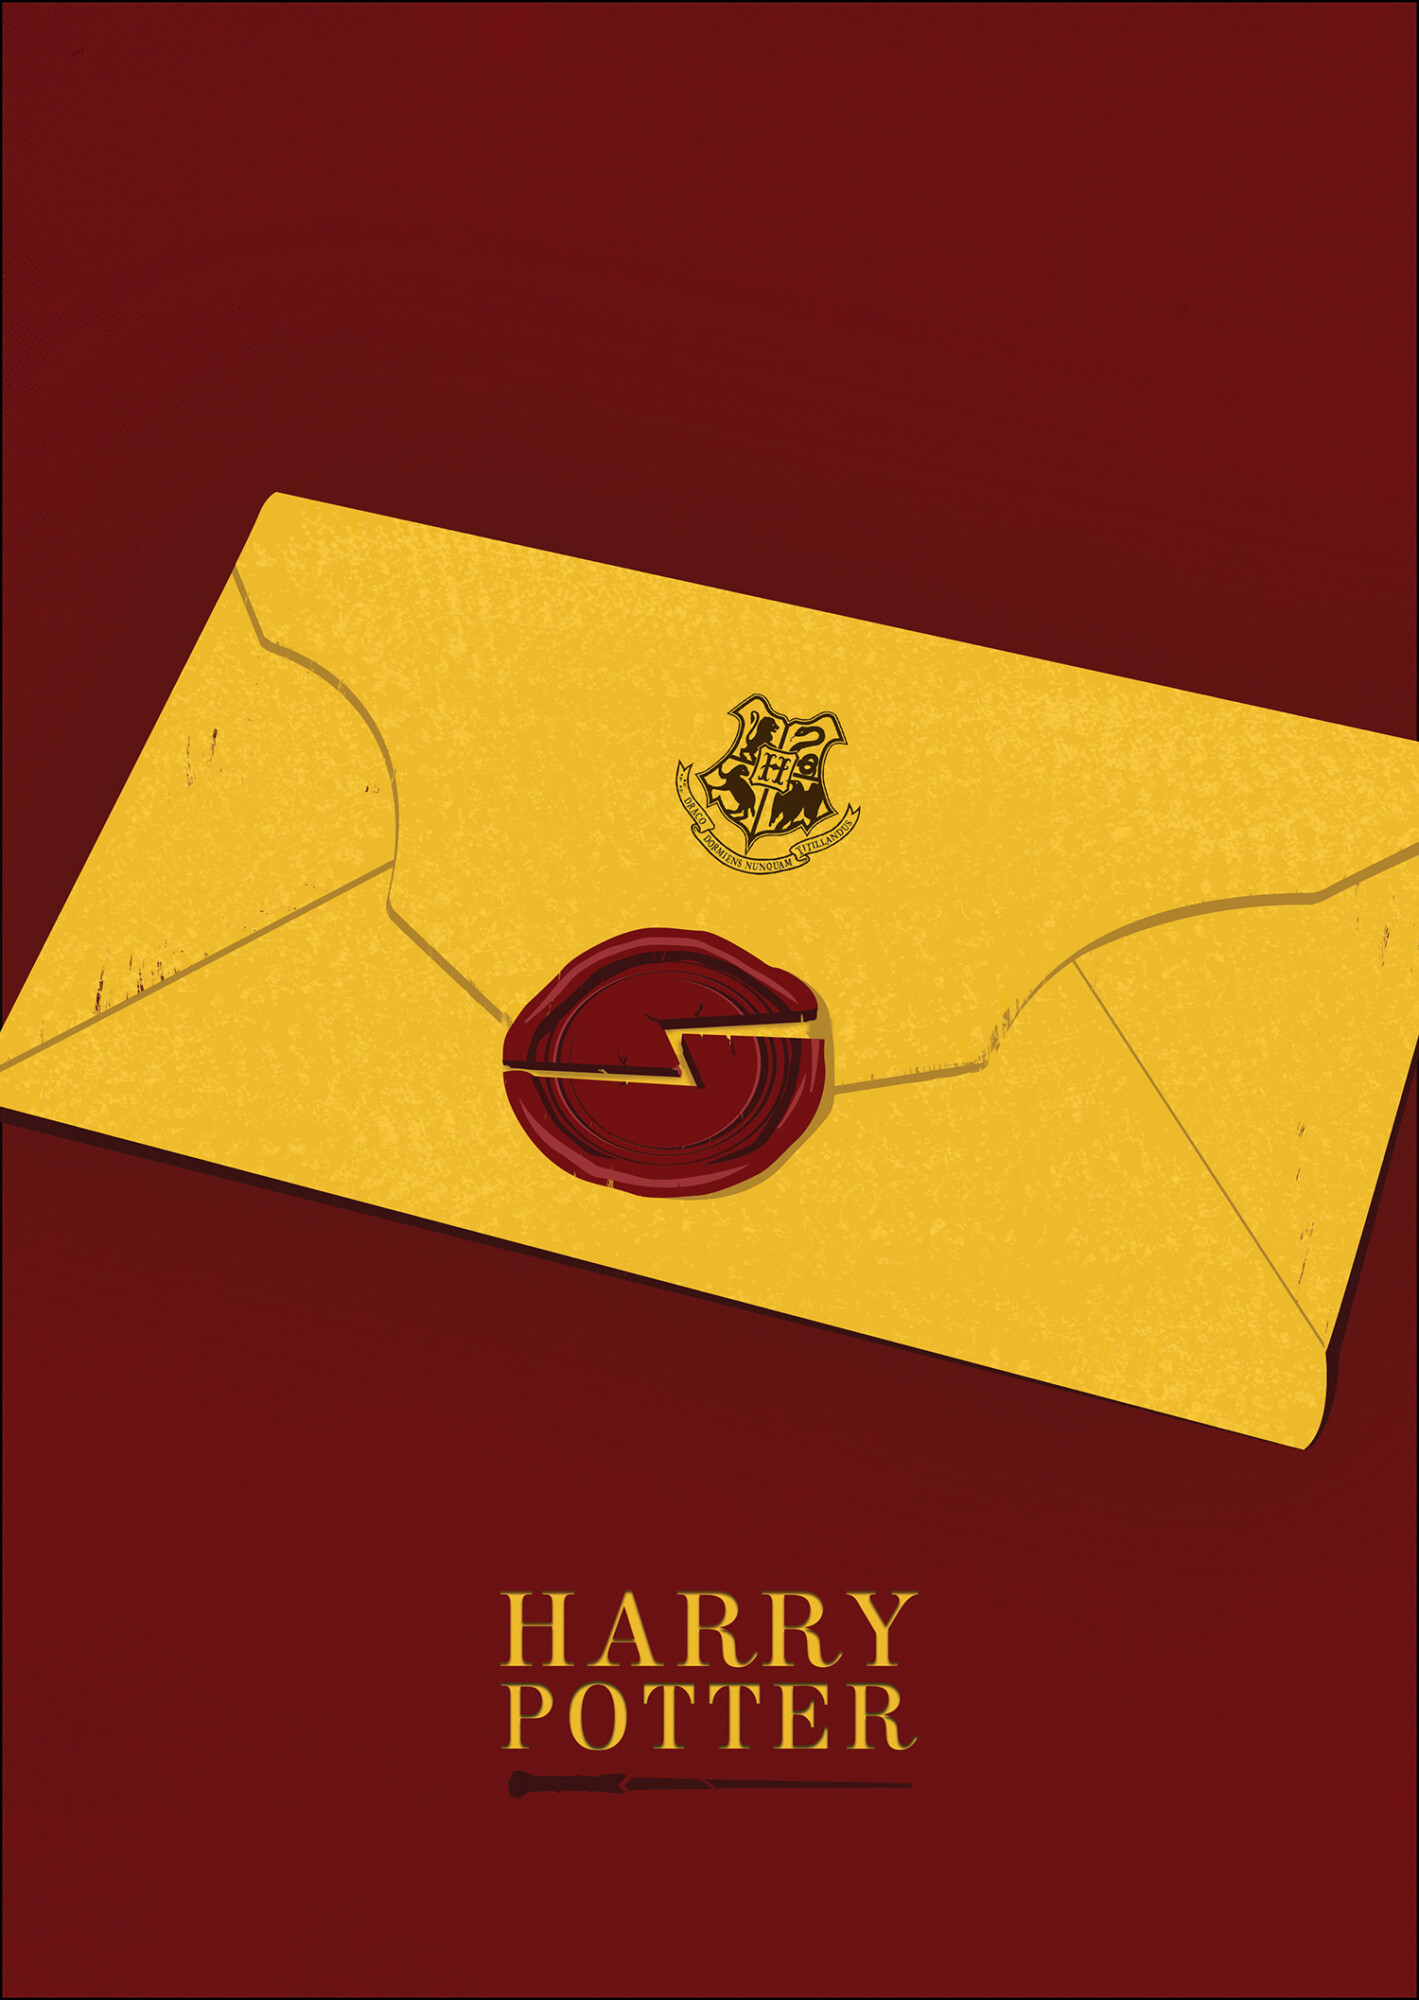 Details about   LEGO 1 X Harry Potter Poster din A3 Prospectus Brochure Catalog 16 1/2x11